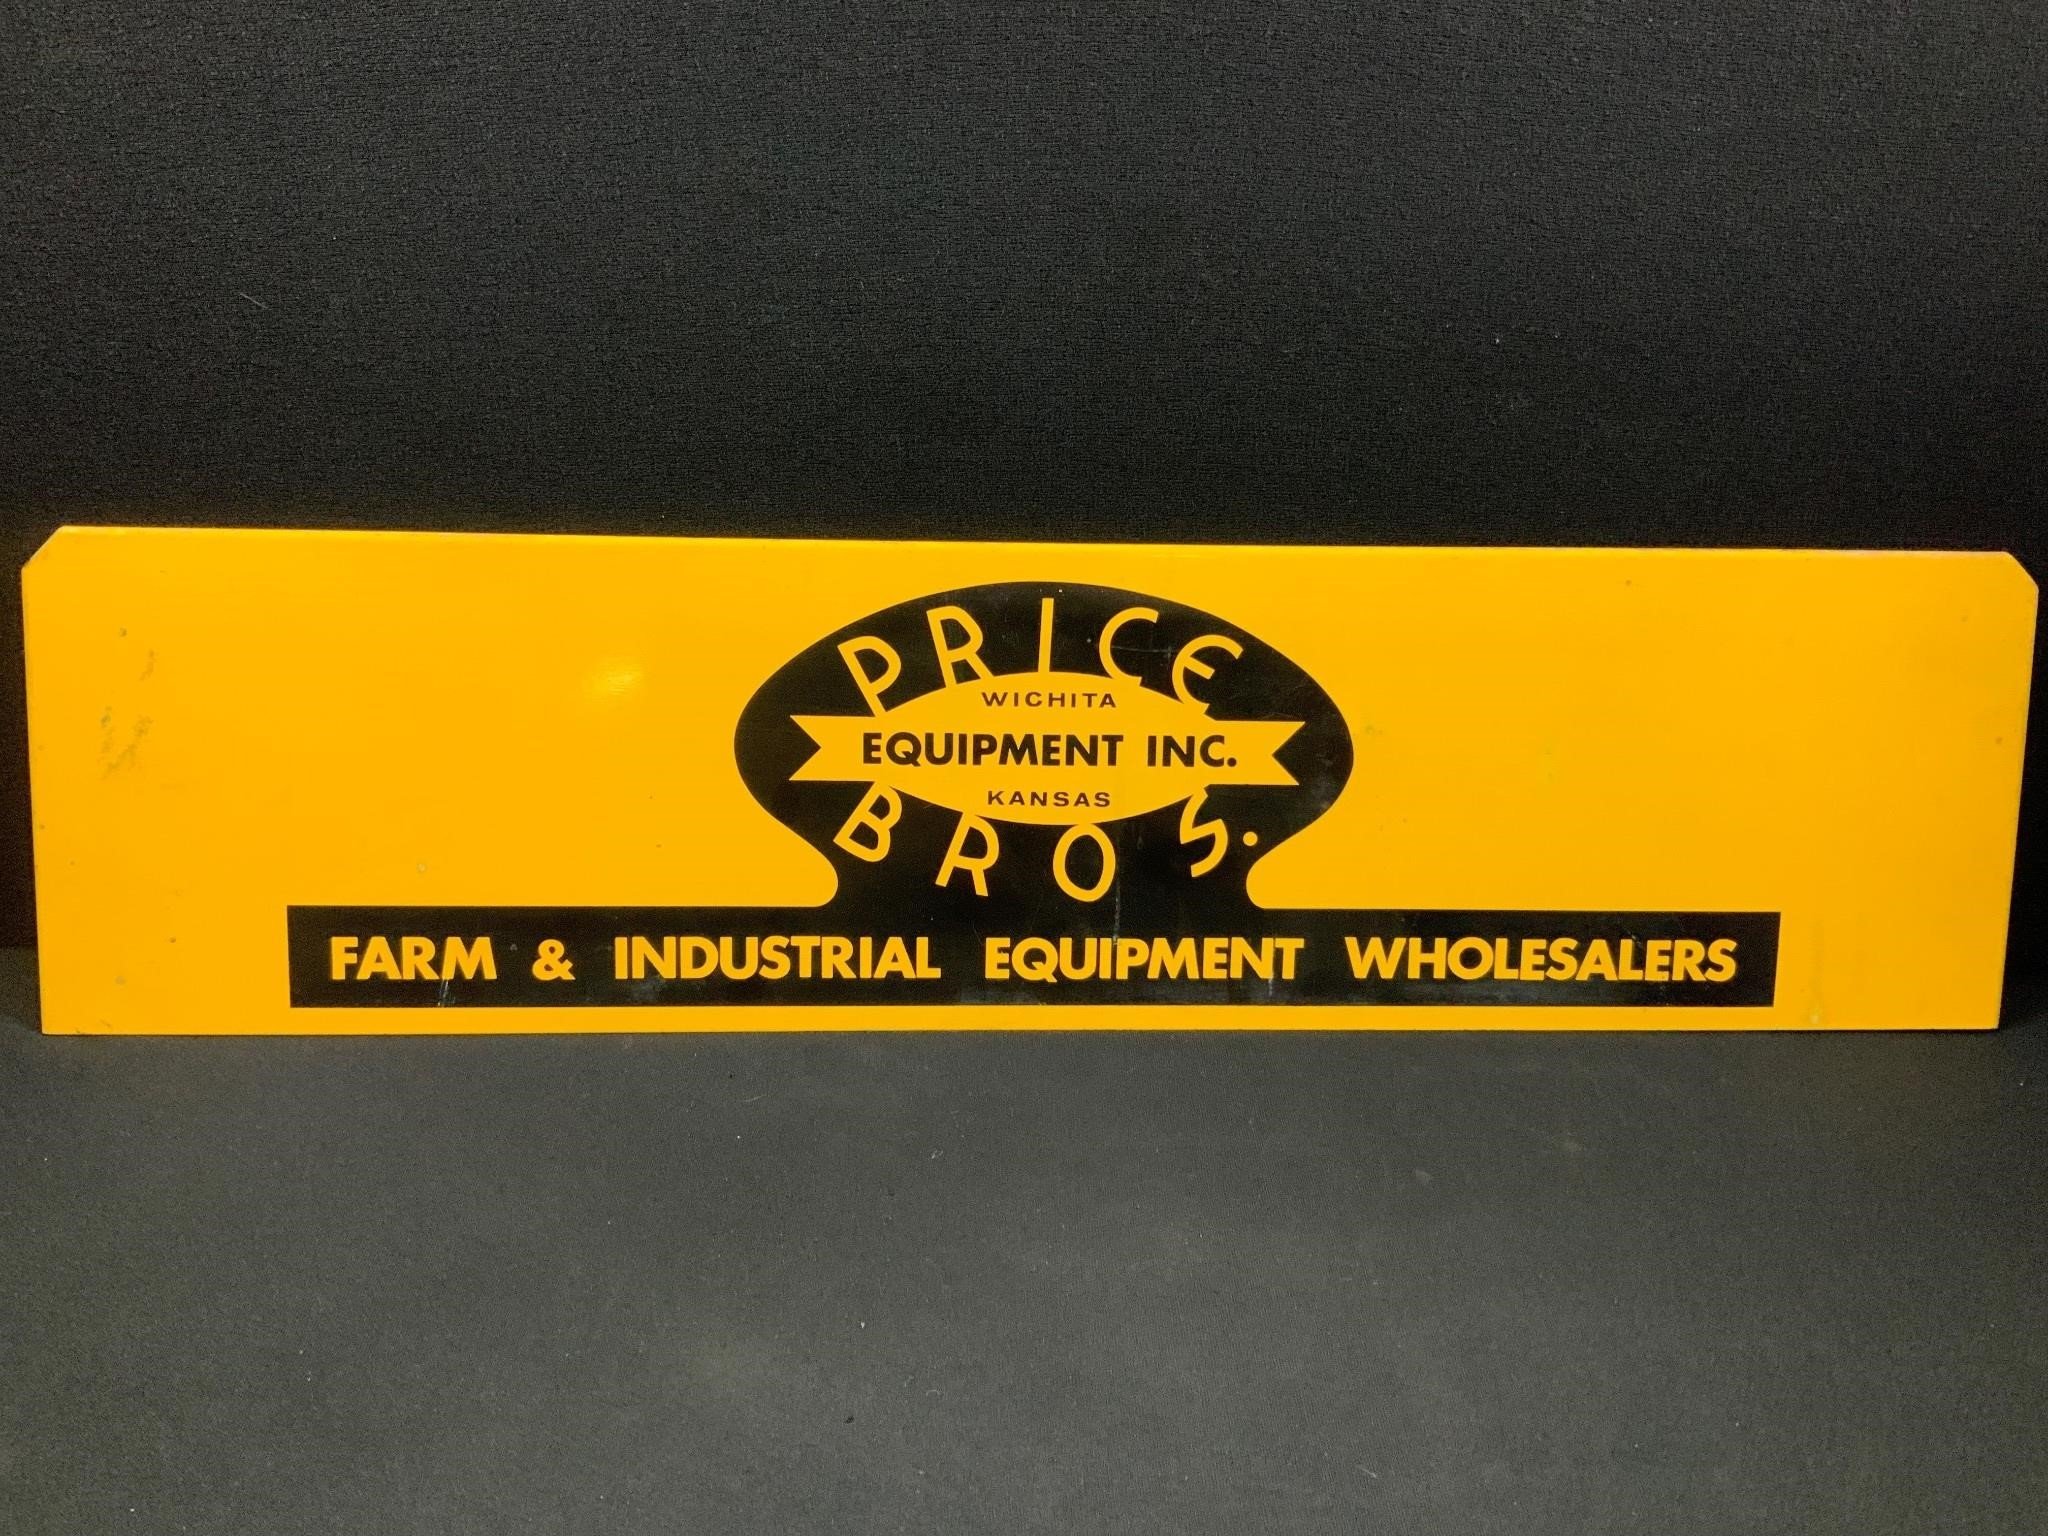 Price Bros. Farm & Industrial Equipment Metal Sign